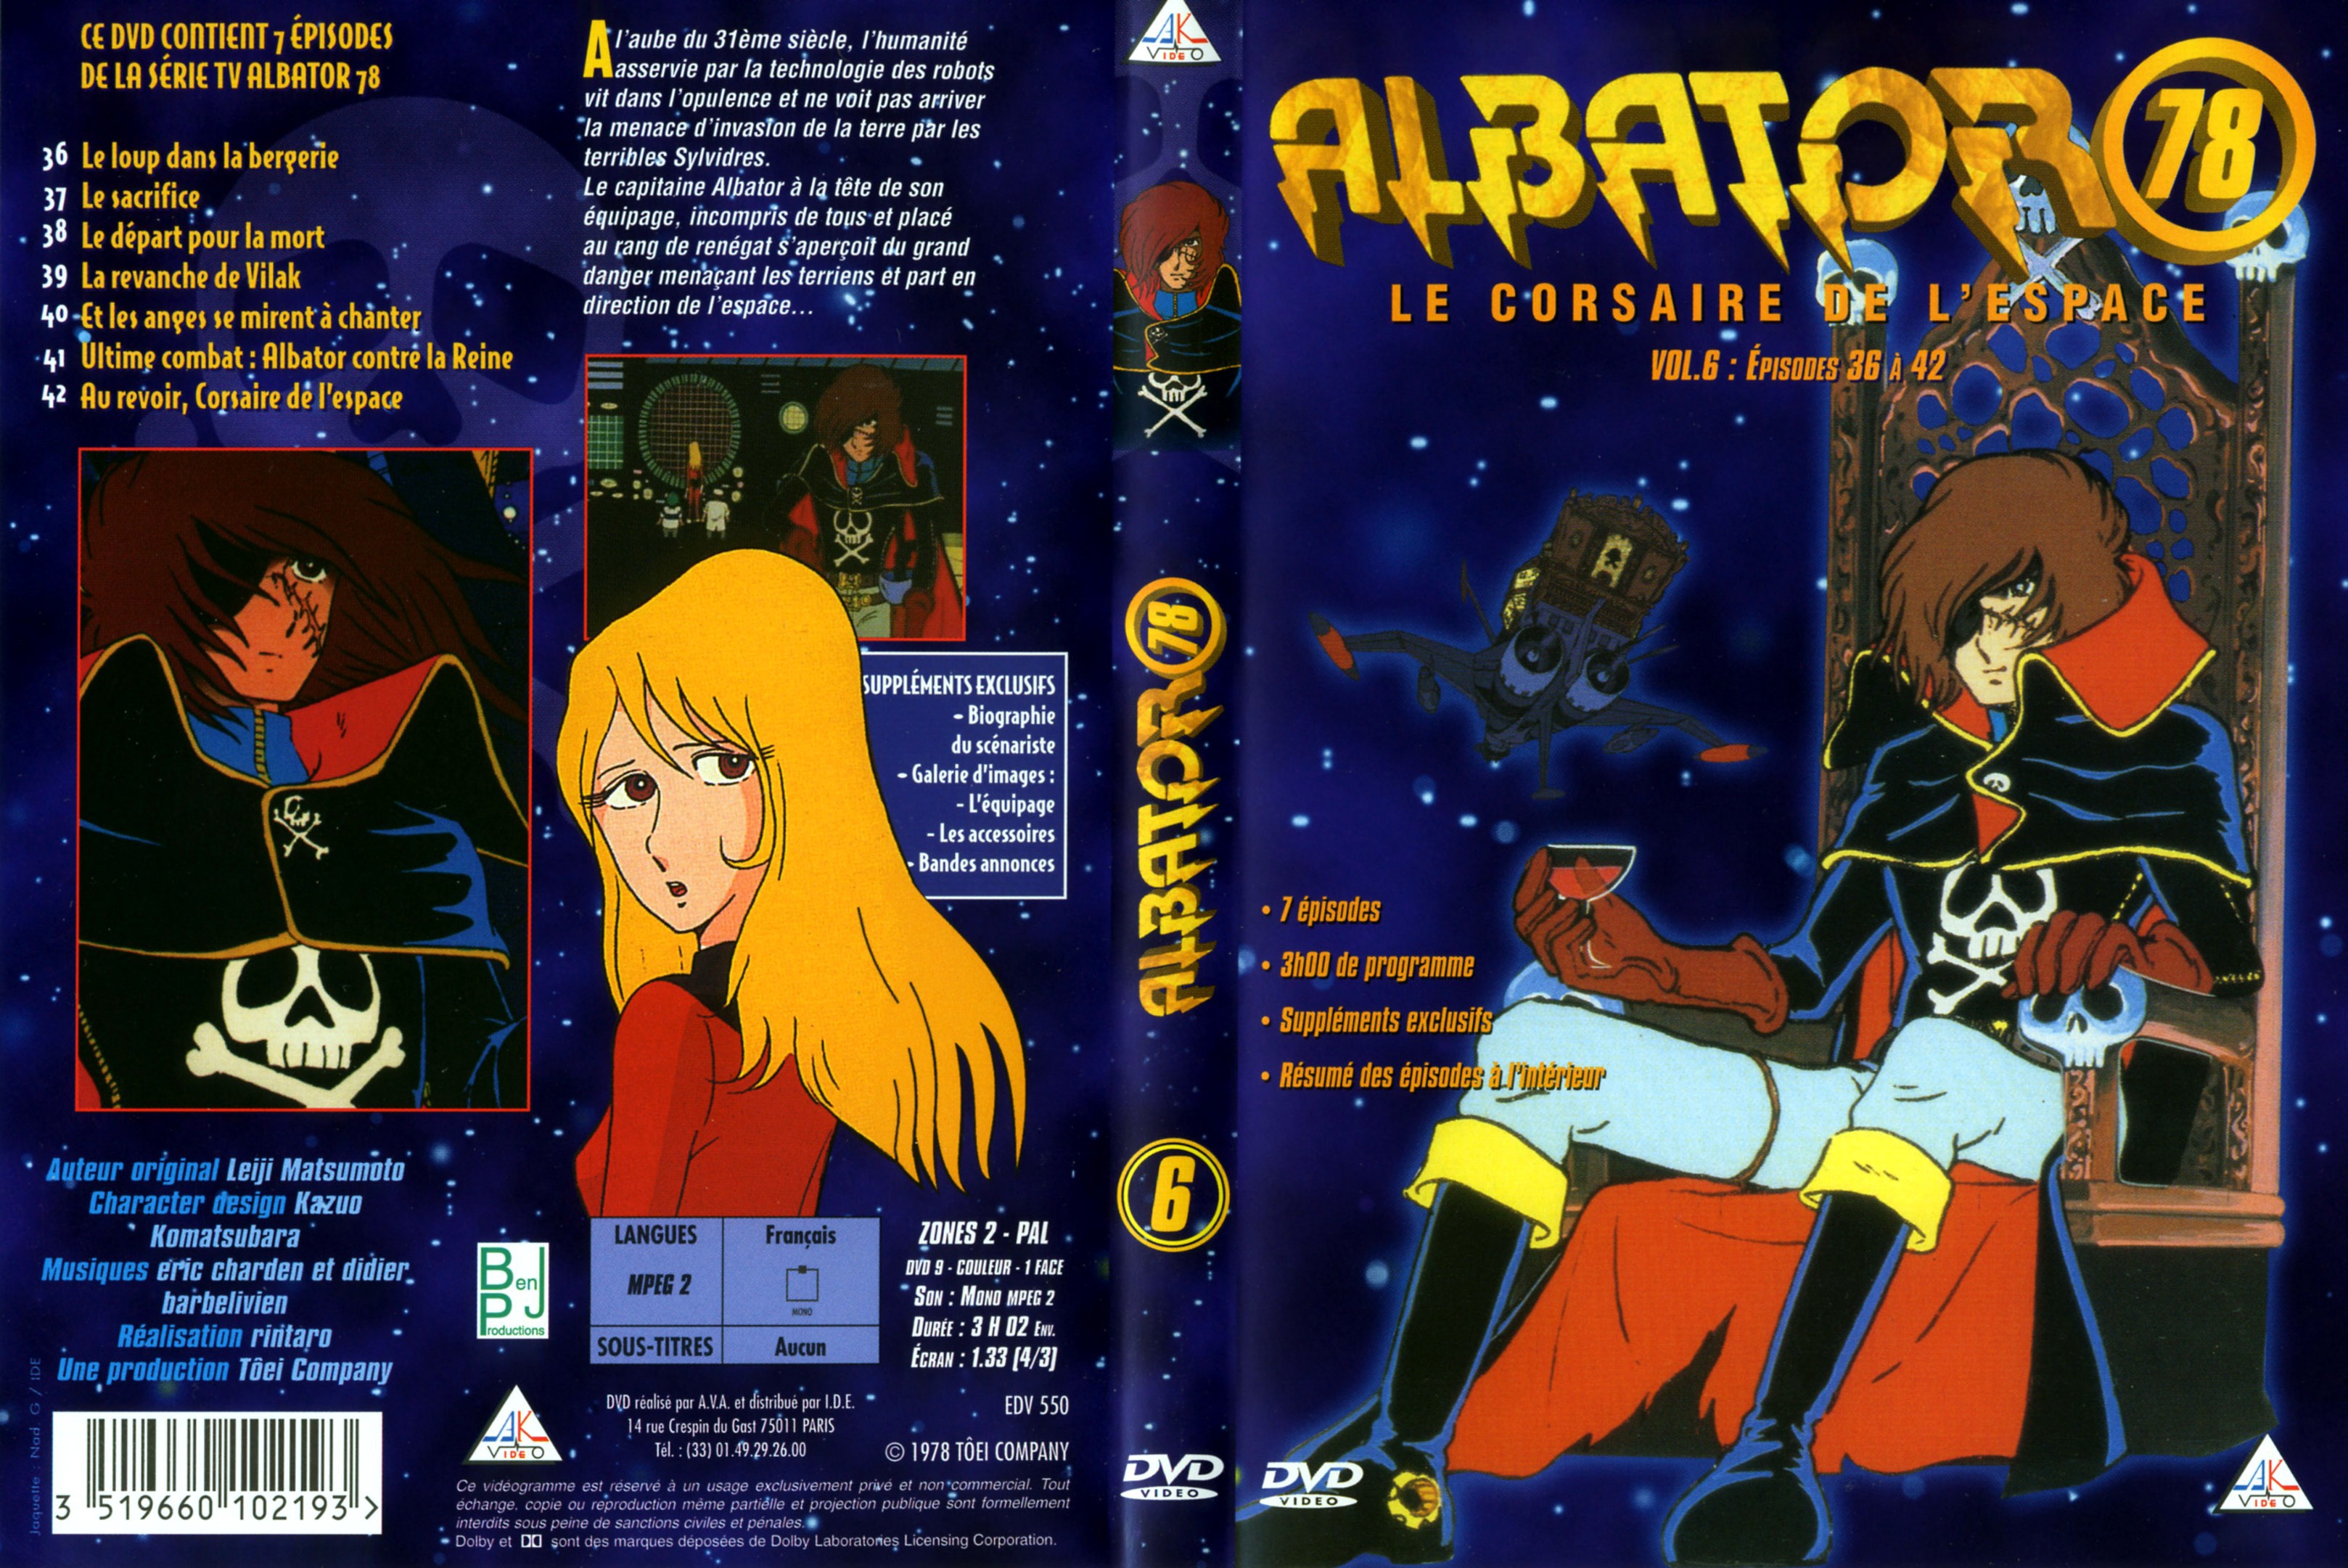 Jaquette DVD Albator 78 vol 6 (AK VIDEO)